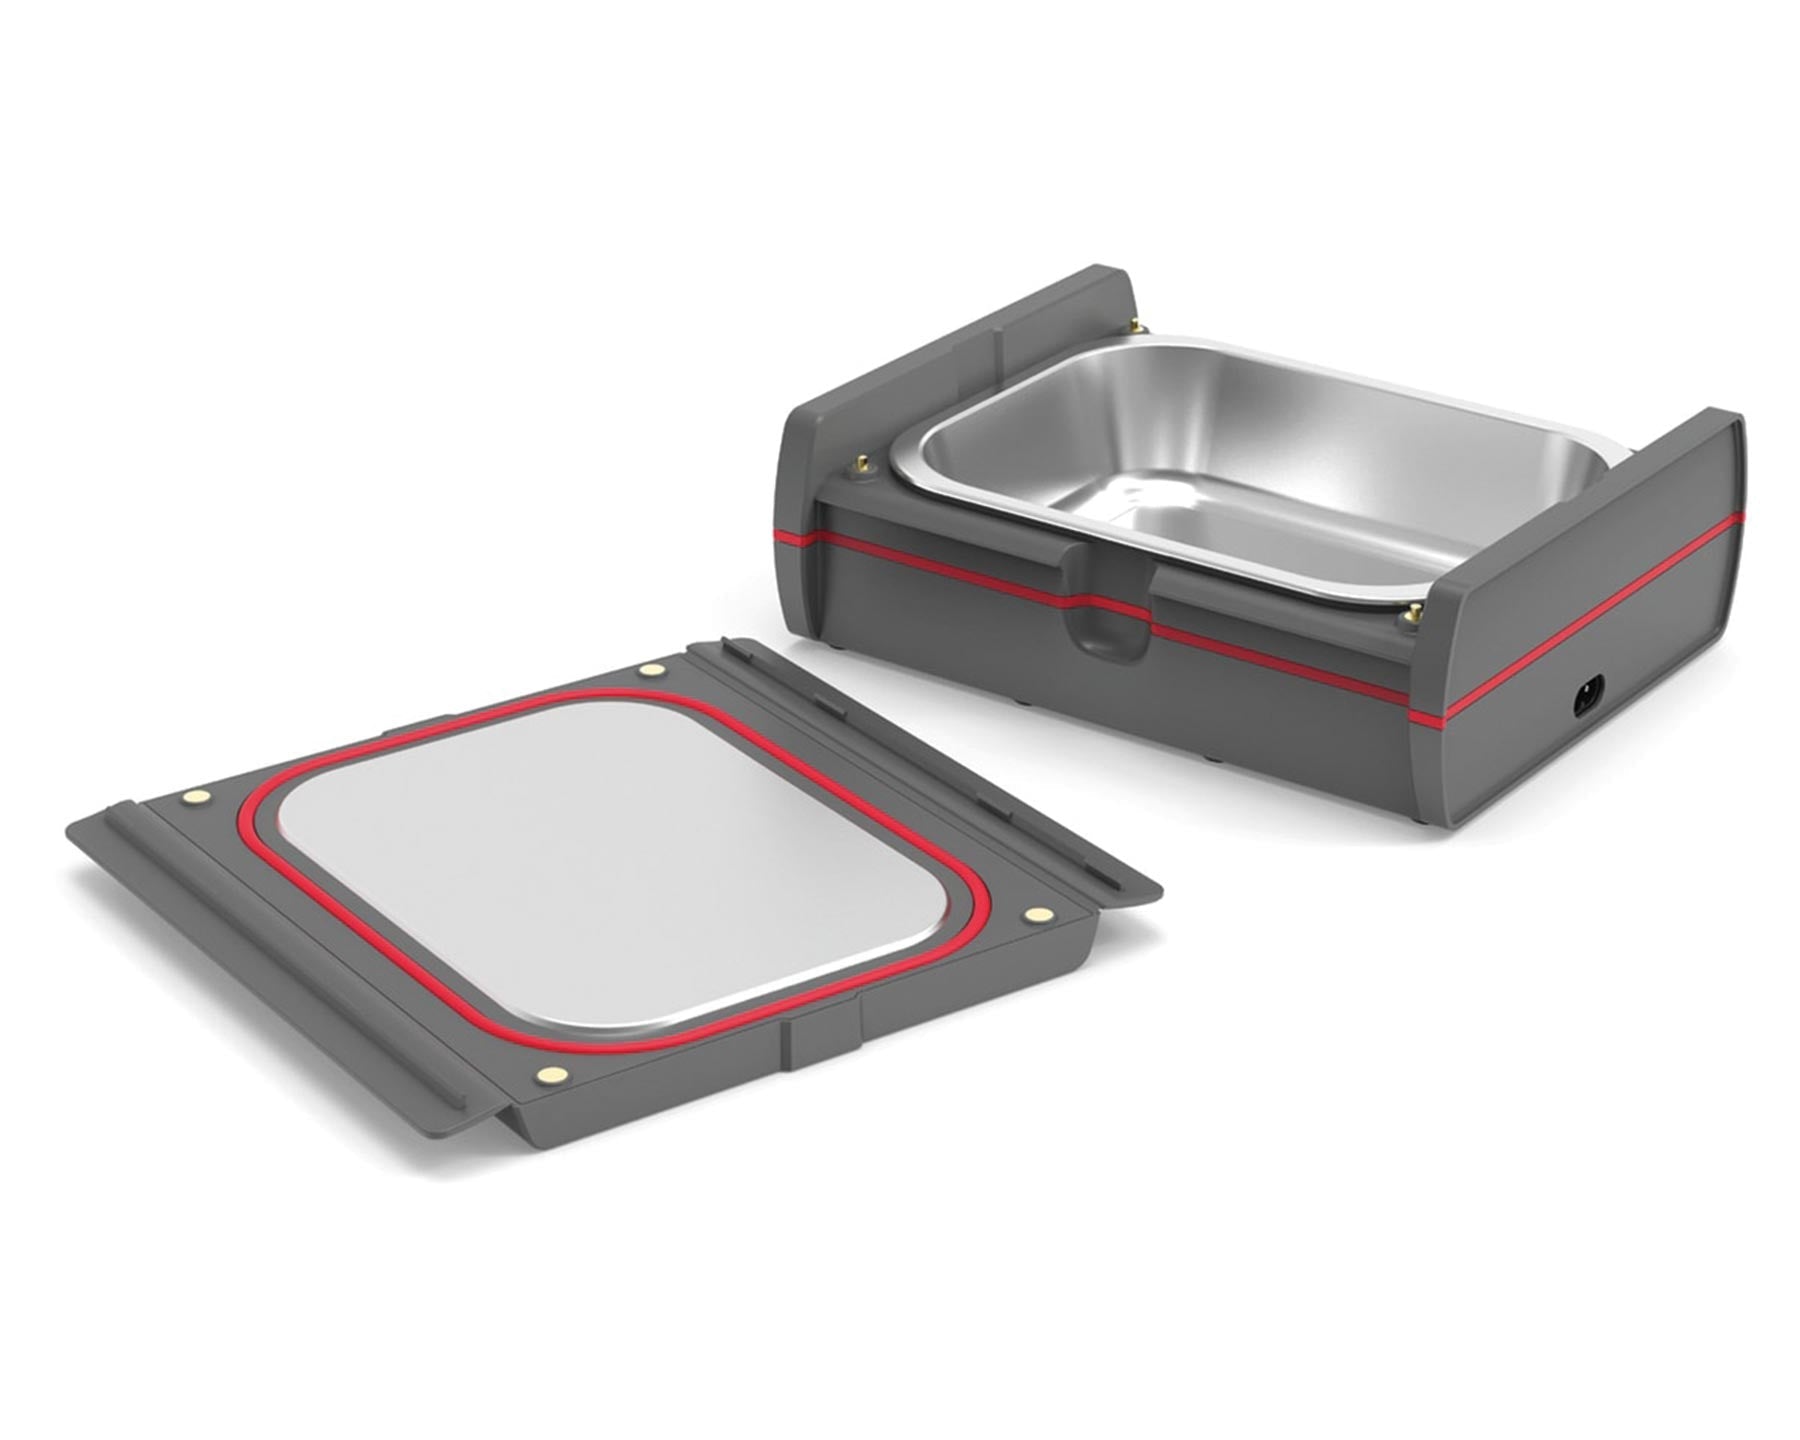 KOENIG HeatsBox, the world's first intelligent, heatable lunch box